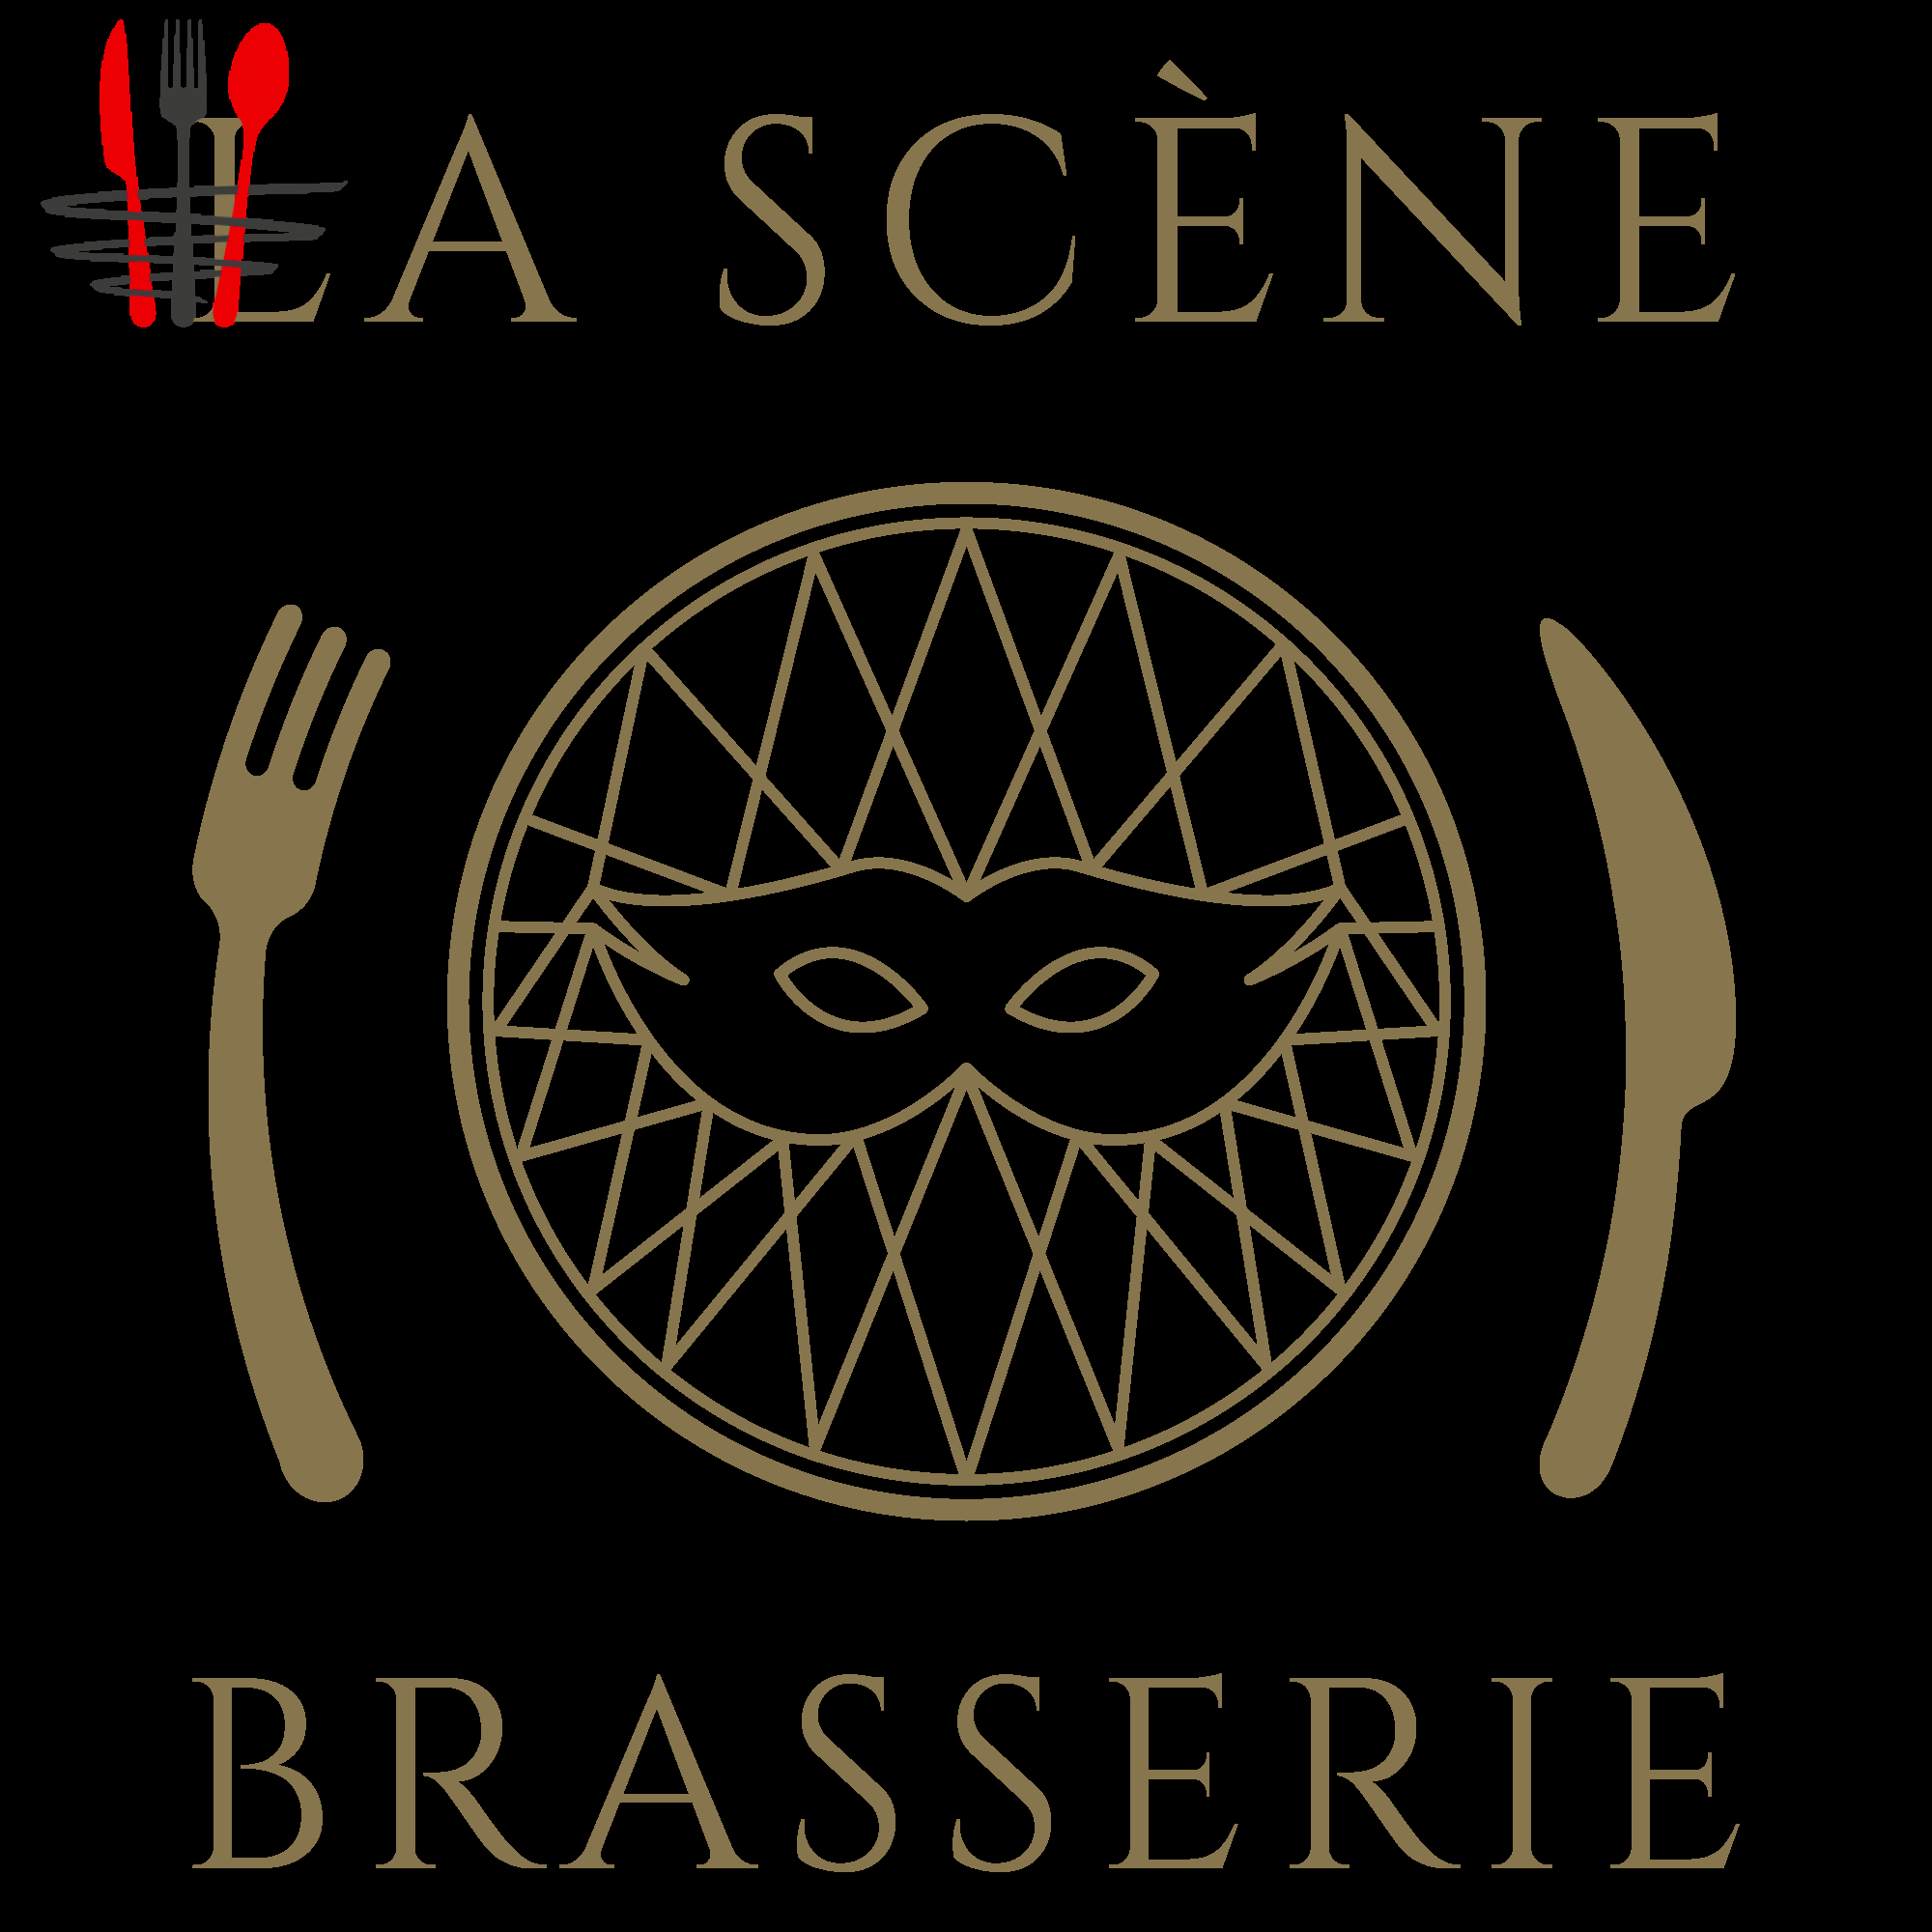 Offre d\'emploi La Scène Brasserie - Chef de Cuisine H/F